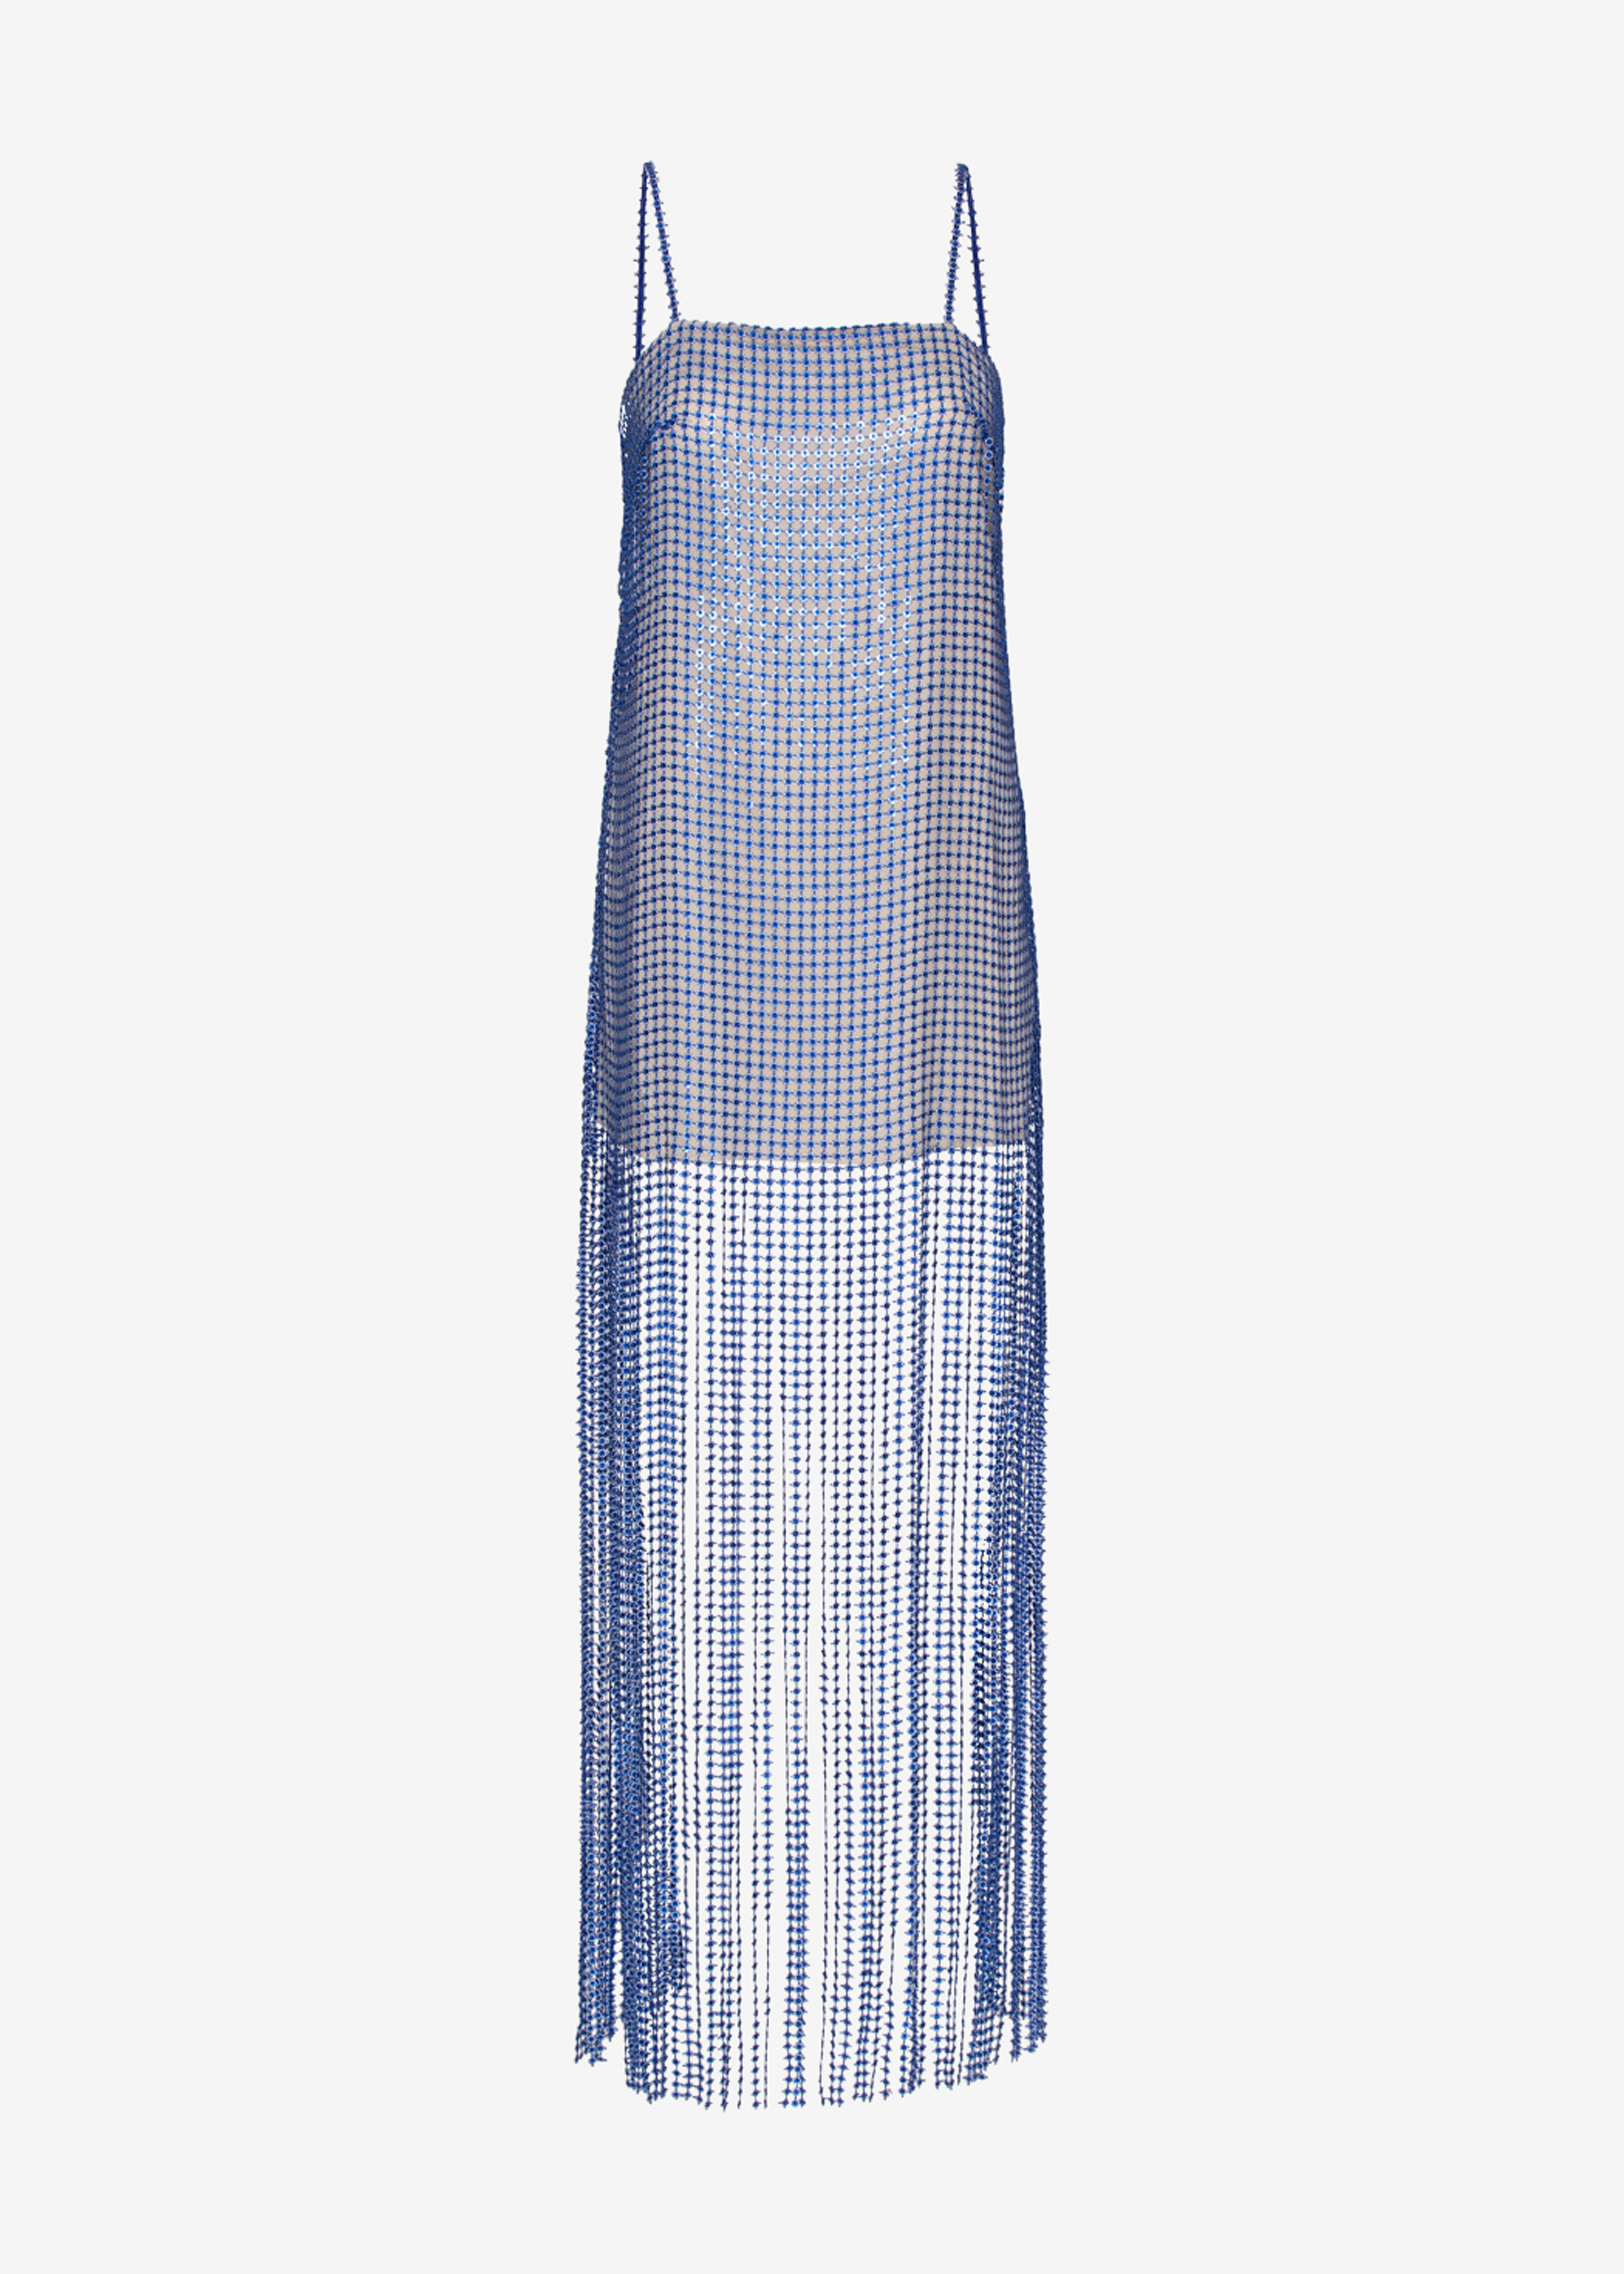 REMAIN Sequin Lace Fringe Dress - Surf The Web Comb. - 11